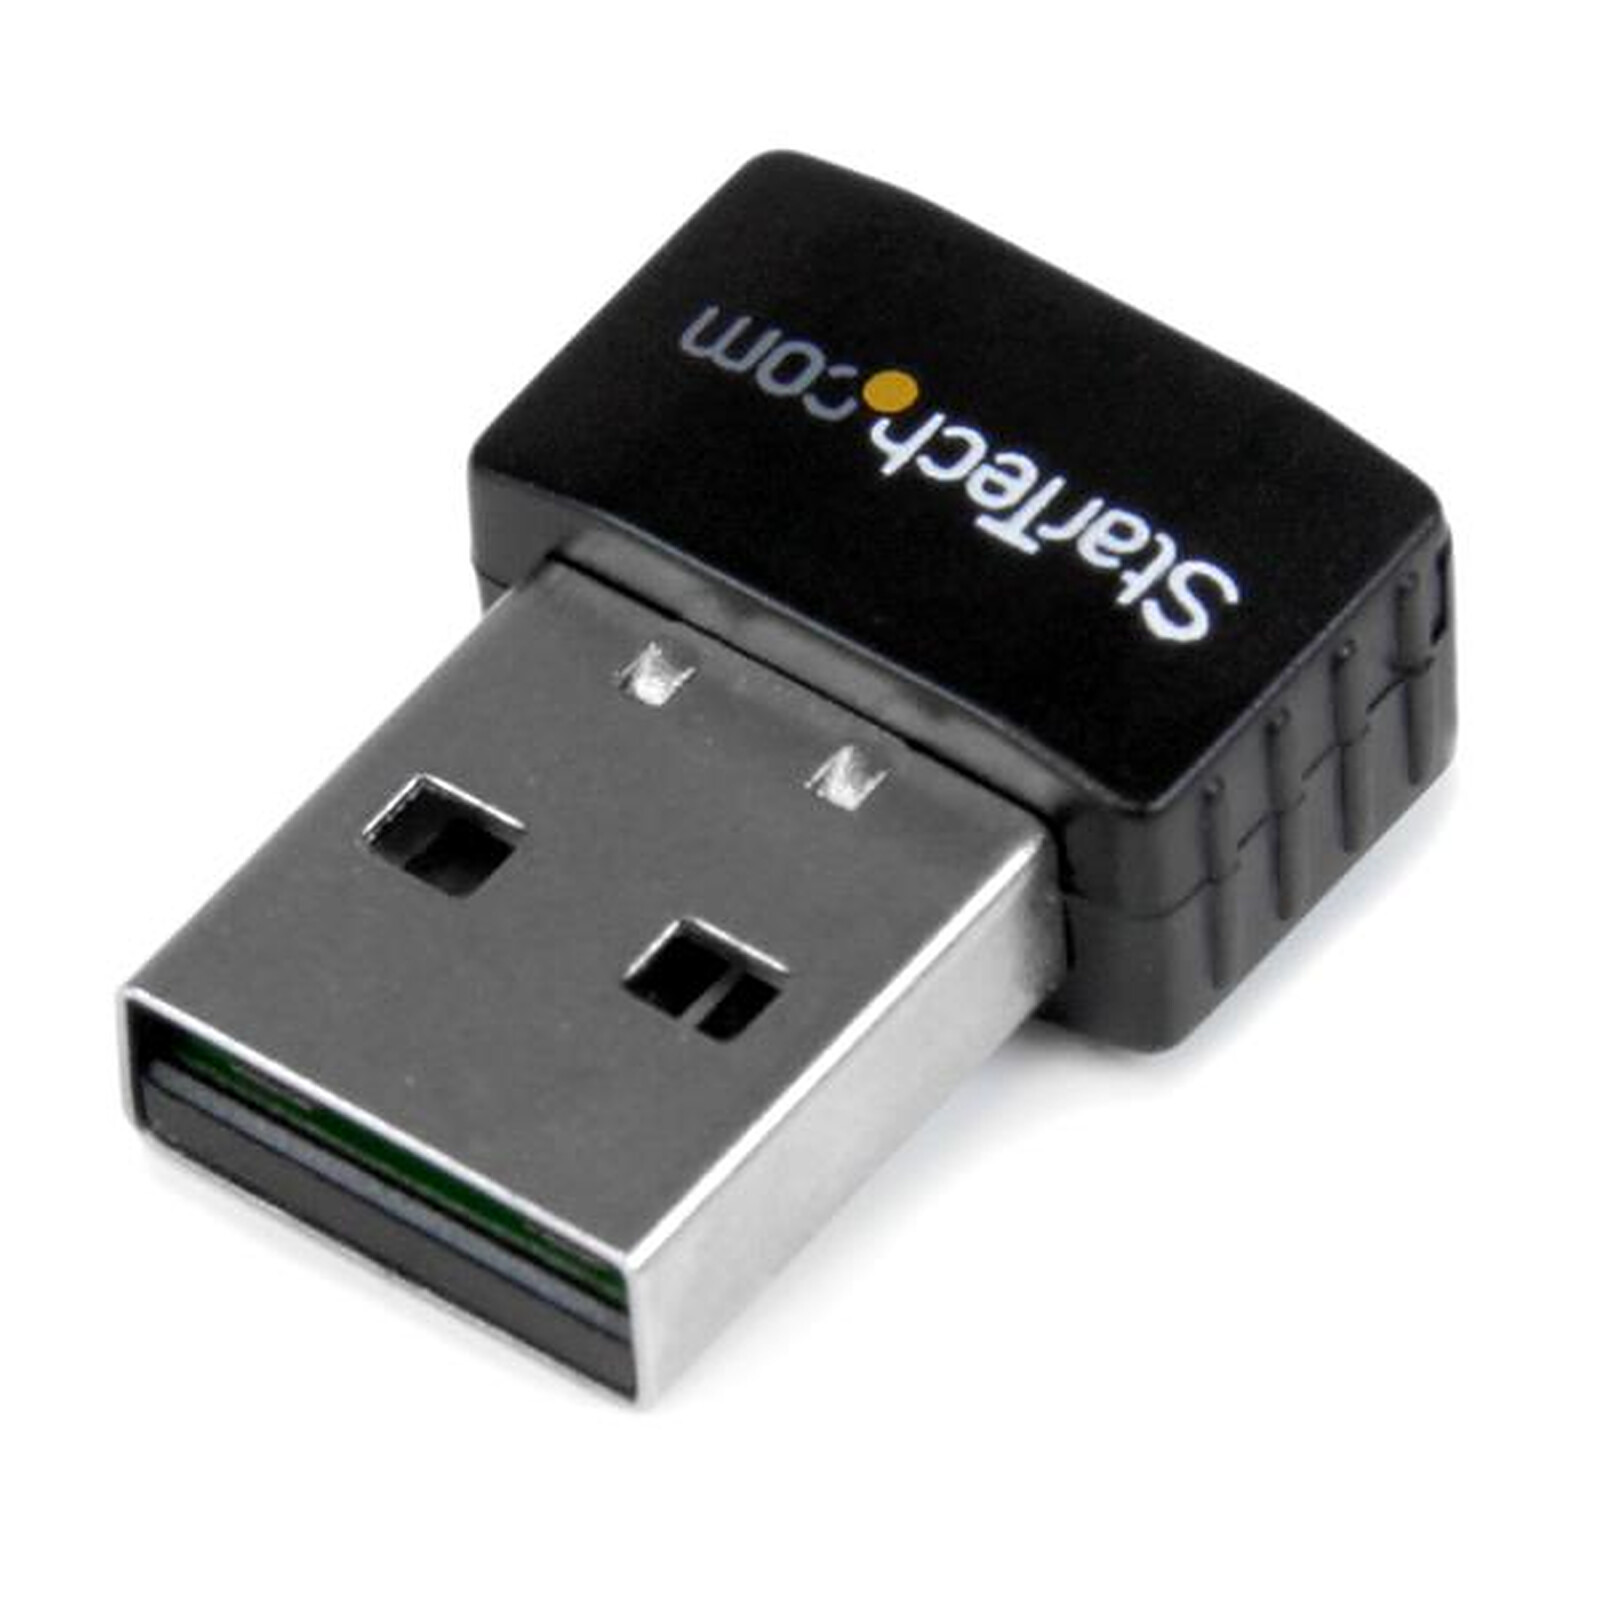 Llave USB 2.0 WiFi 802.11n 2T2R de StarTech.com - Tarjeta de red - LDLC